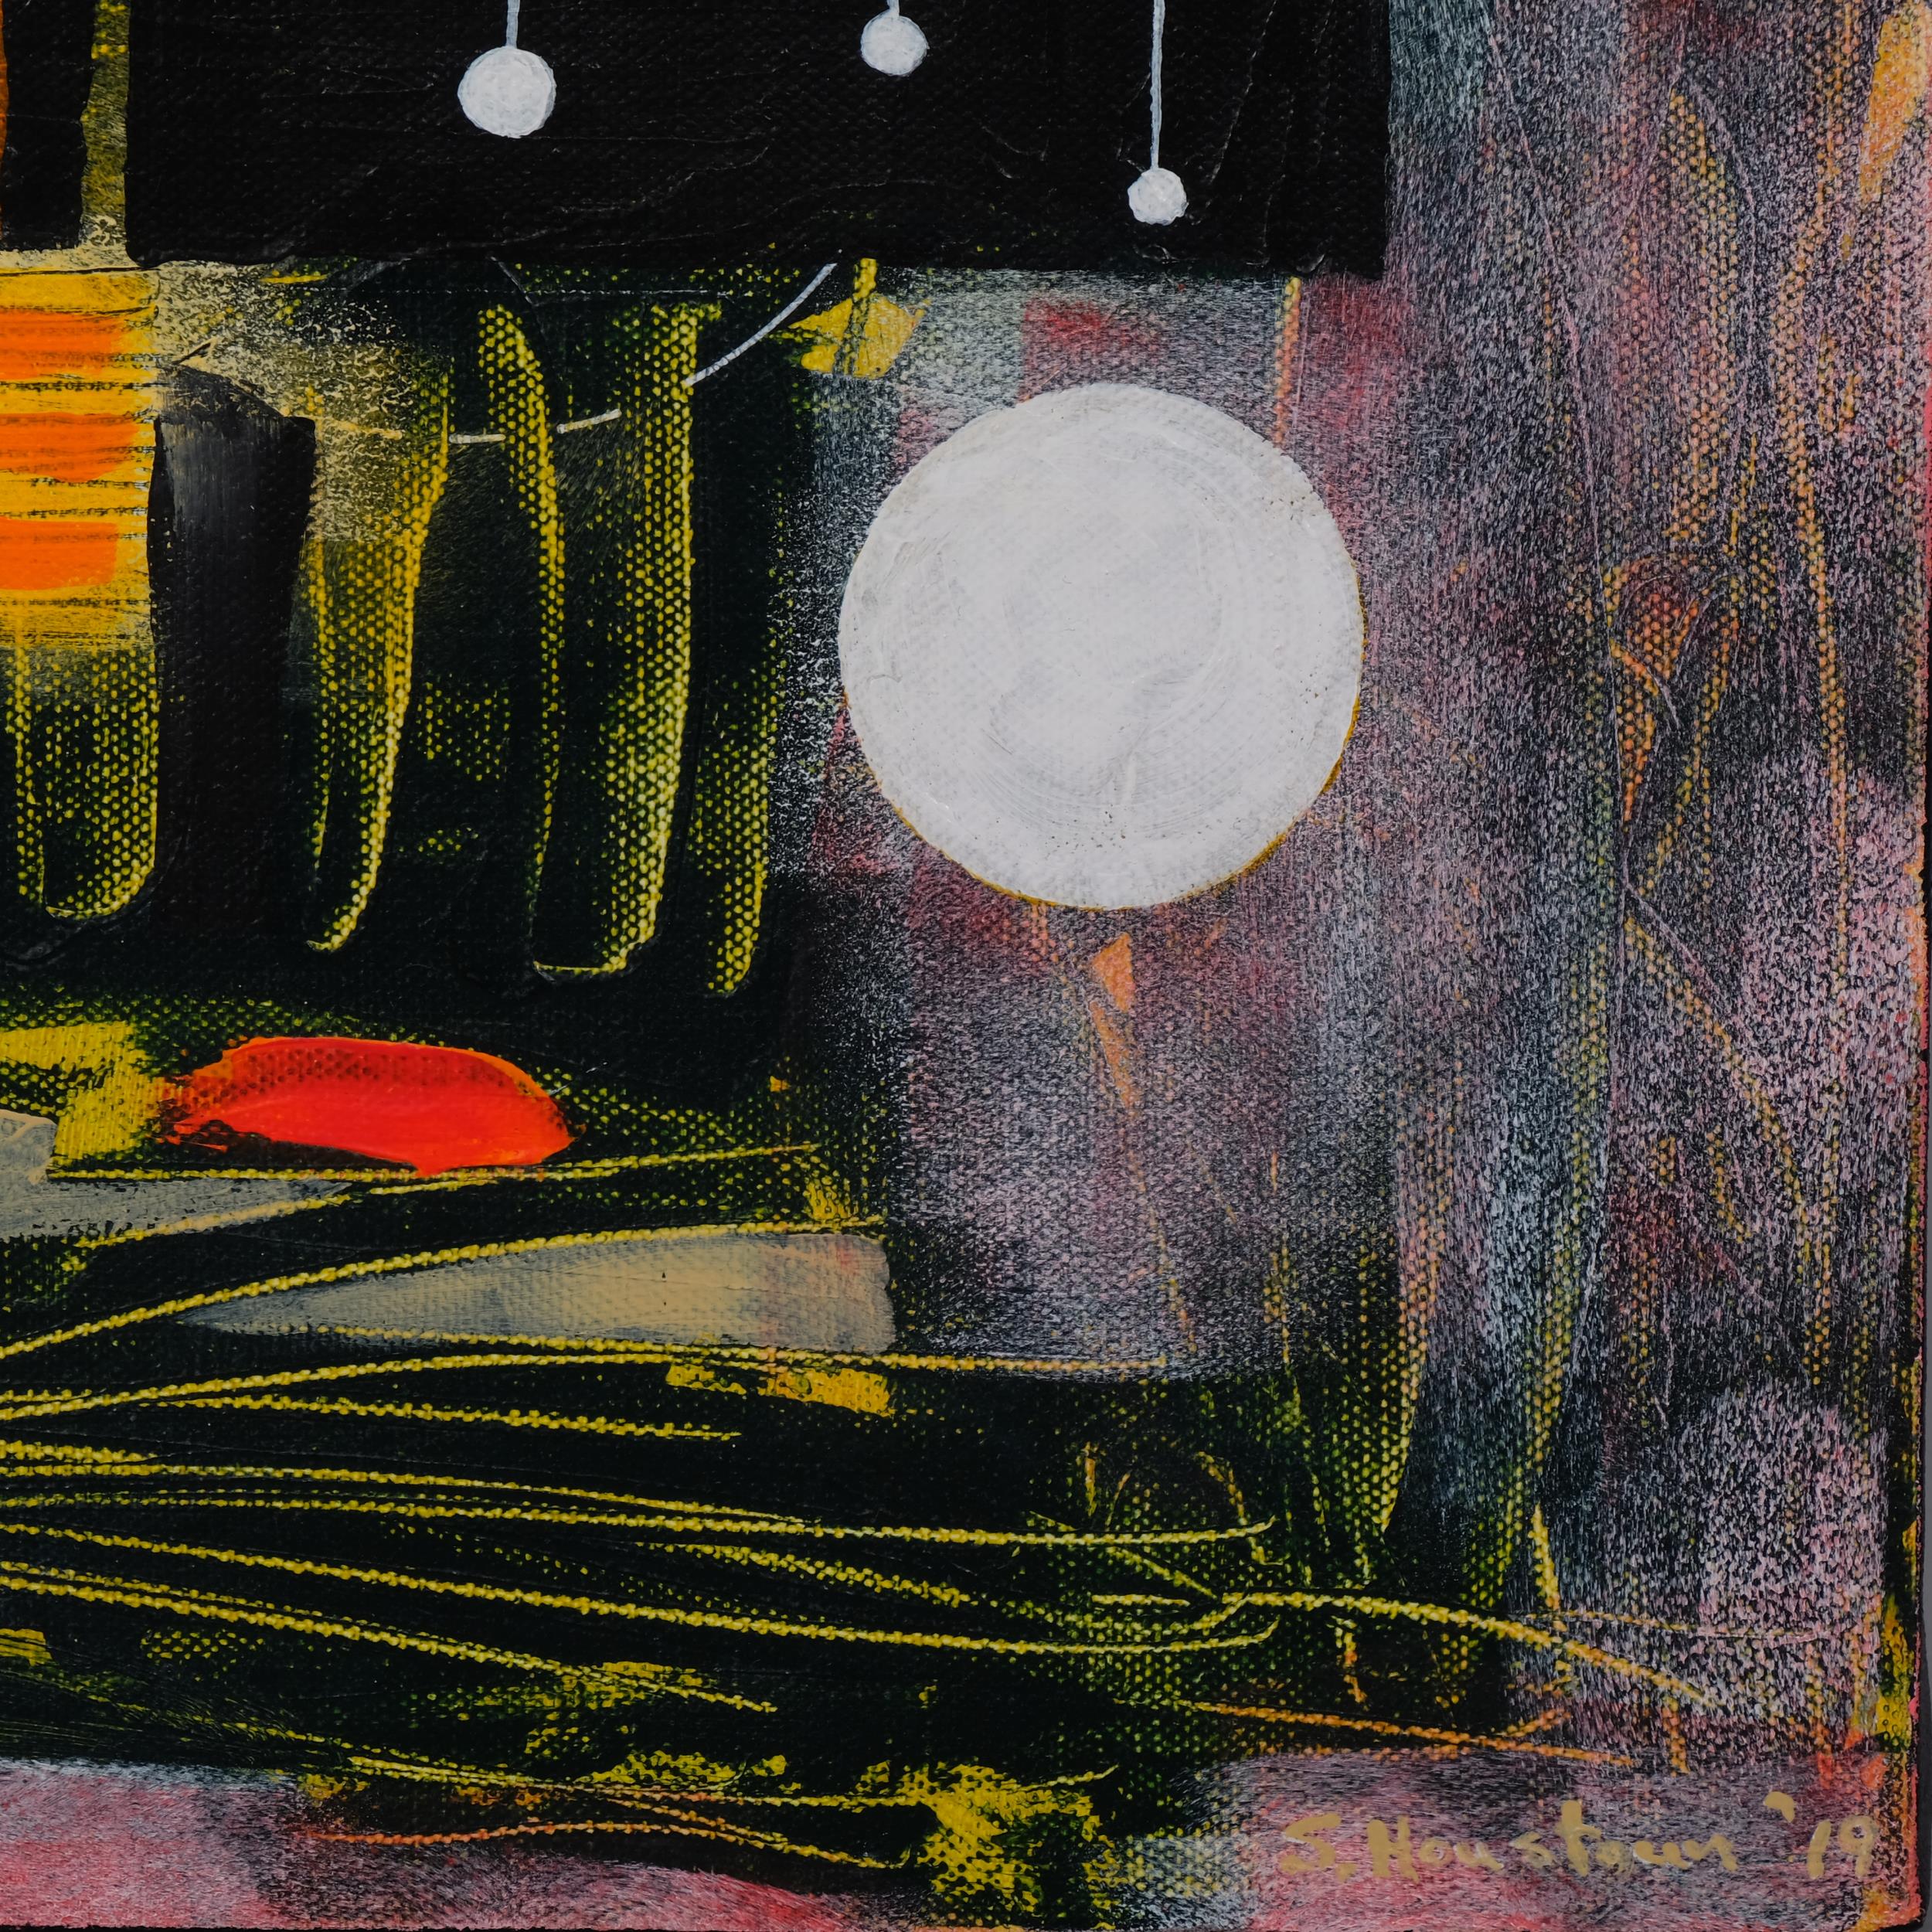 Steve Houstoun (born 1953), abstract composition, oil on canvas, signed, 50cm x 50cm, unframed - Image 3 of 4